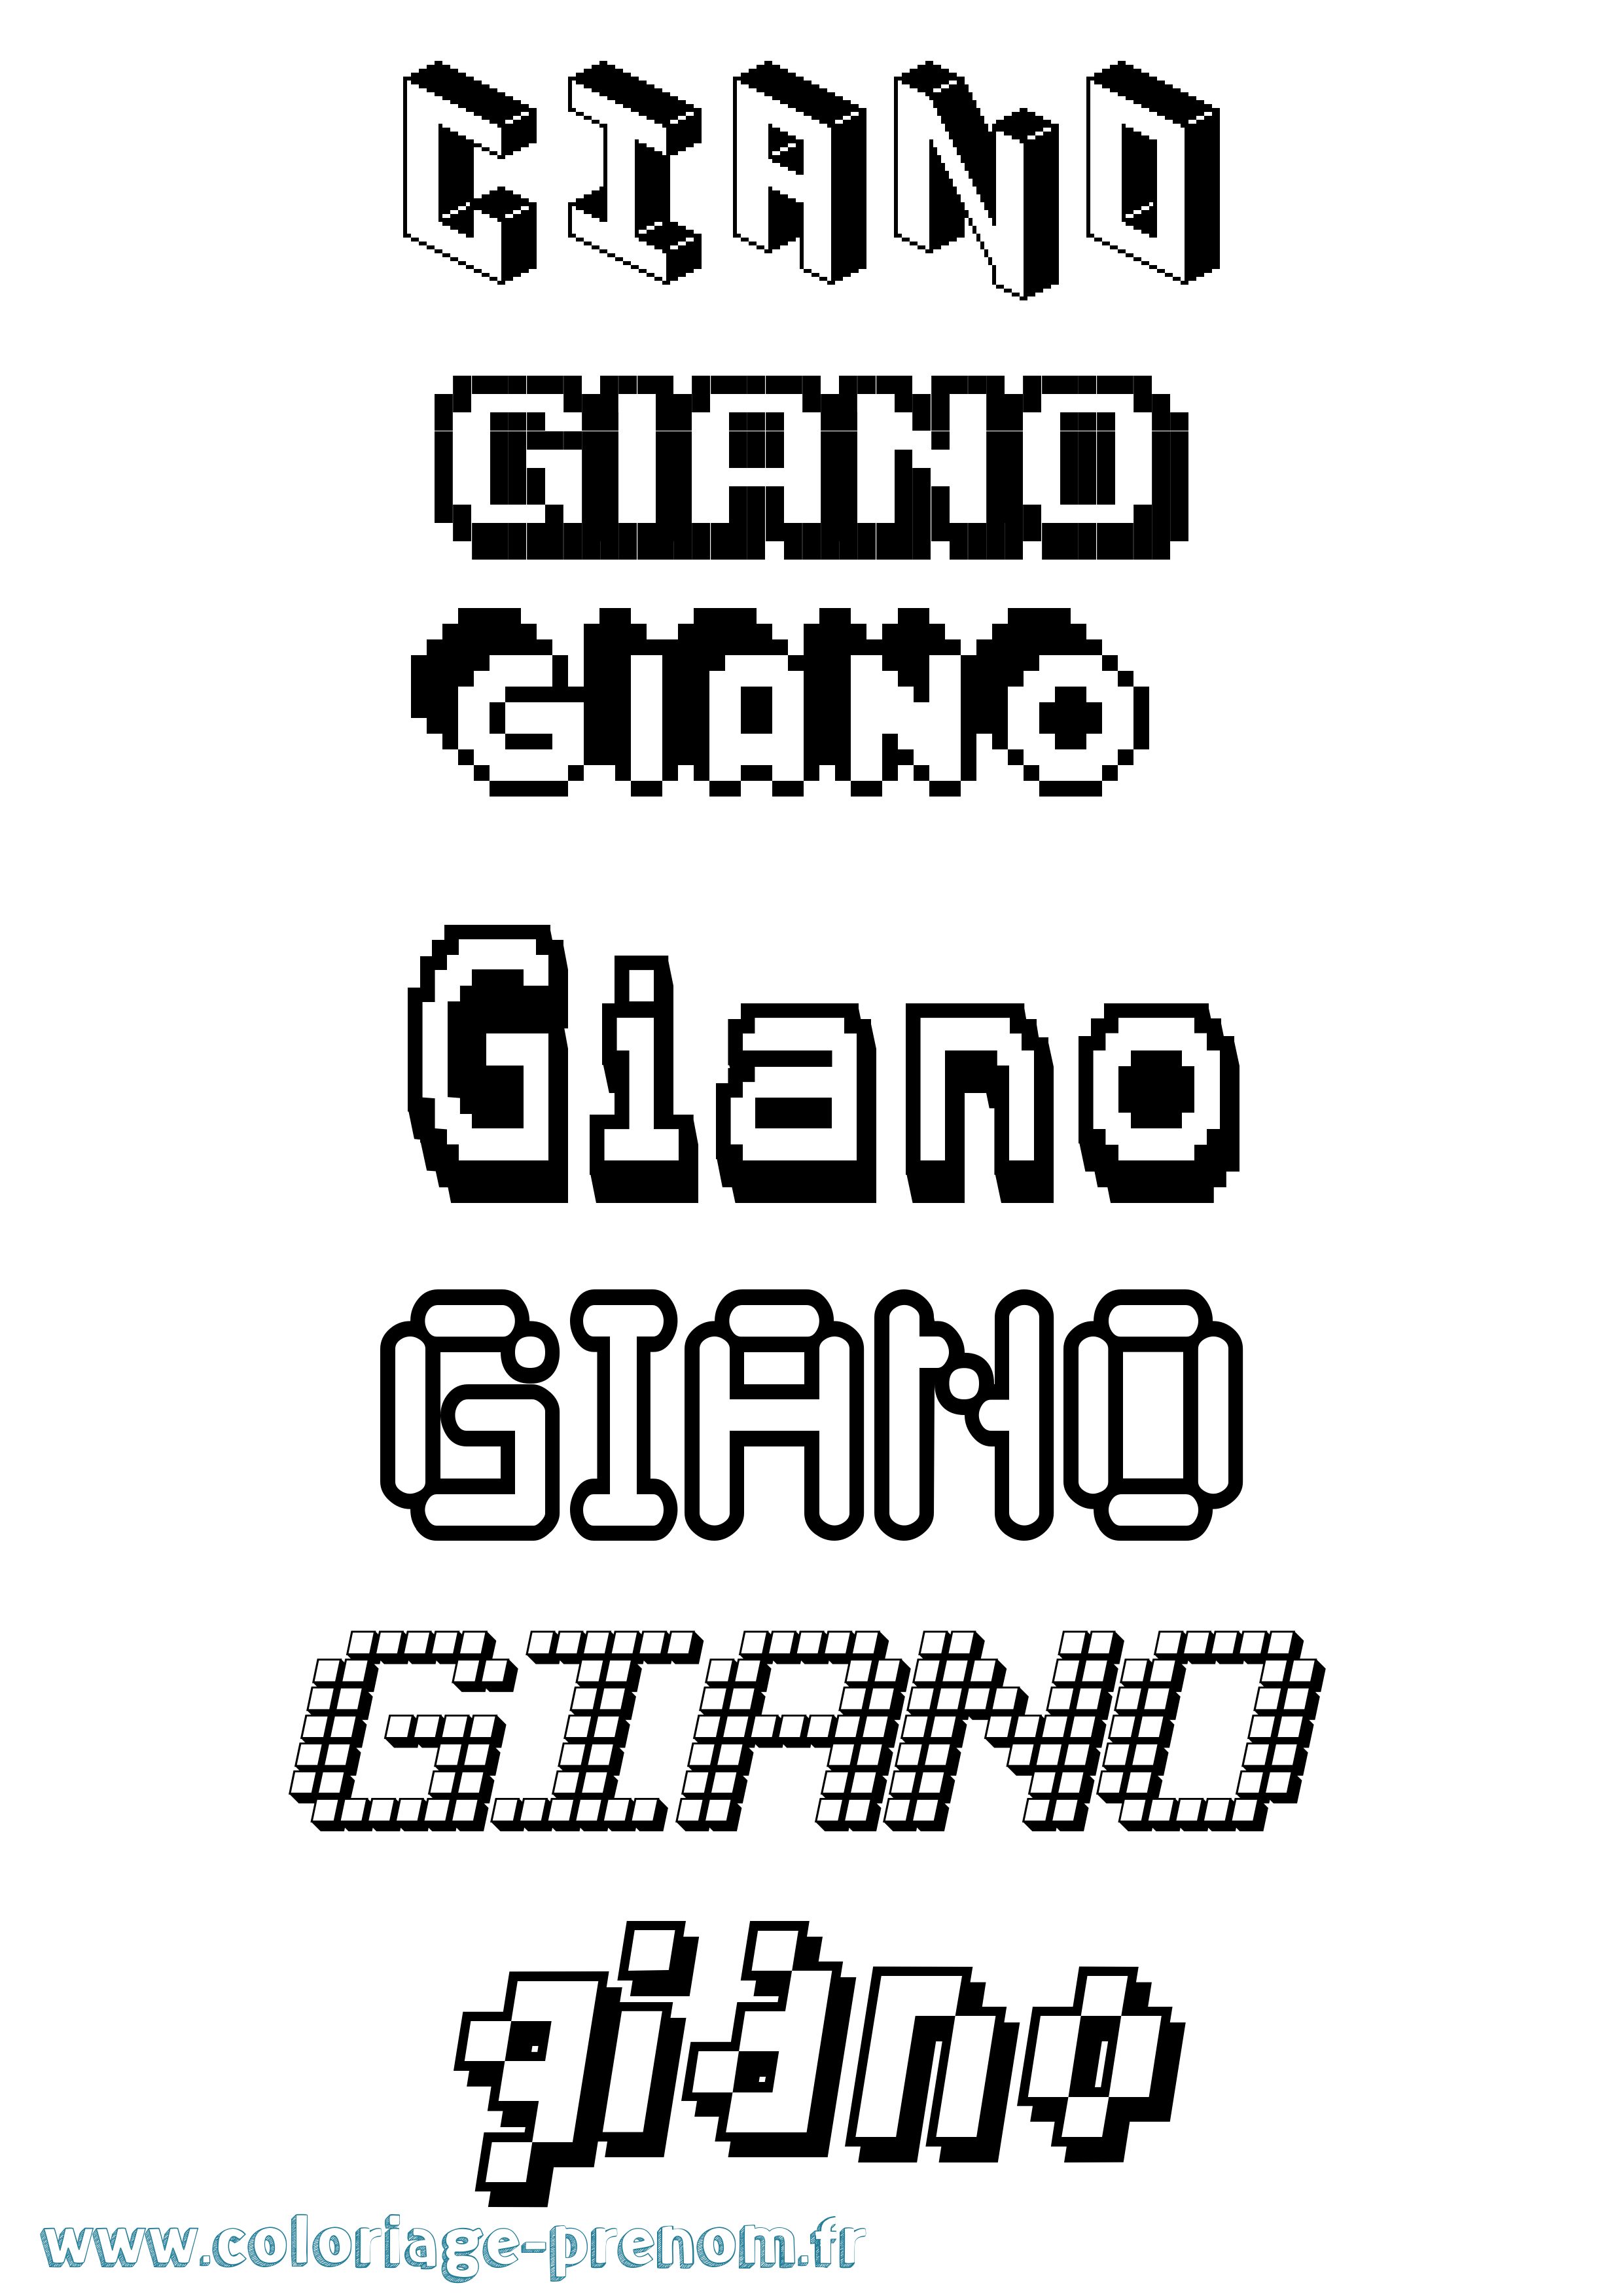 Coloriage prénom Giano Pixel